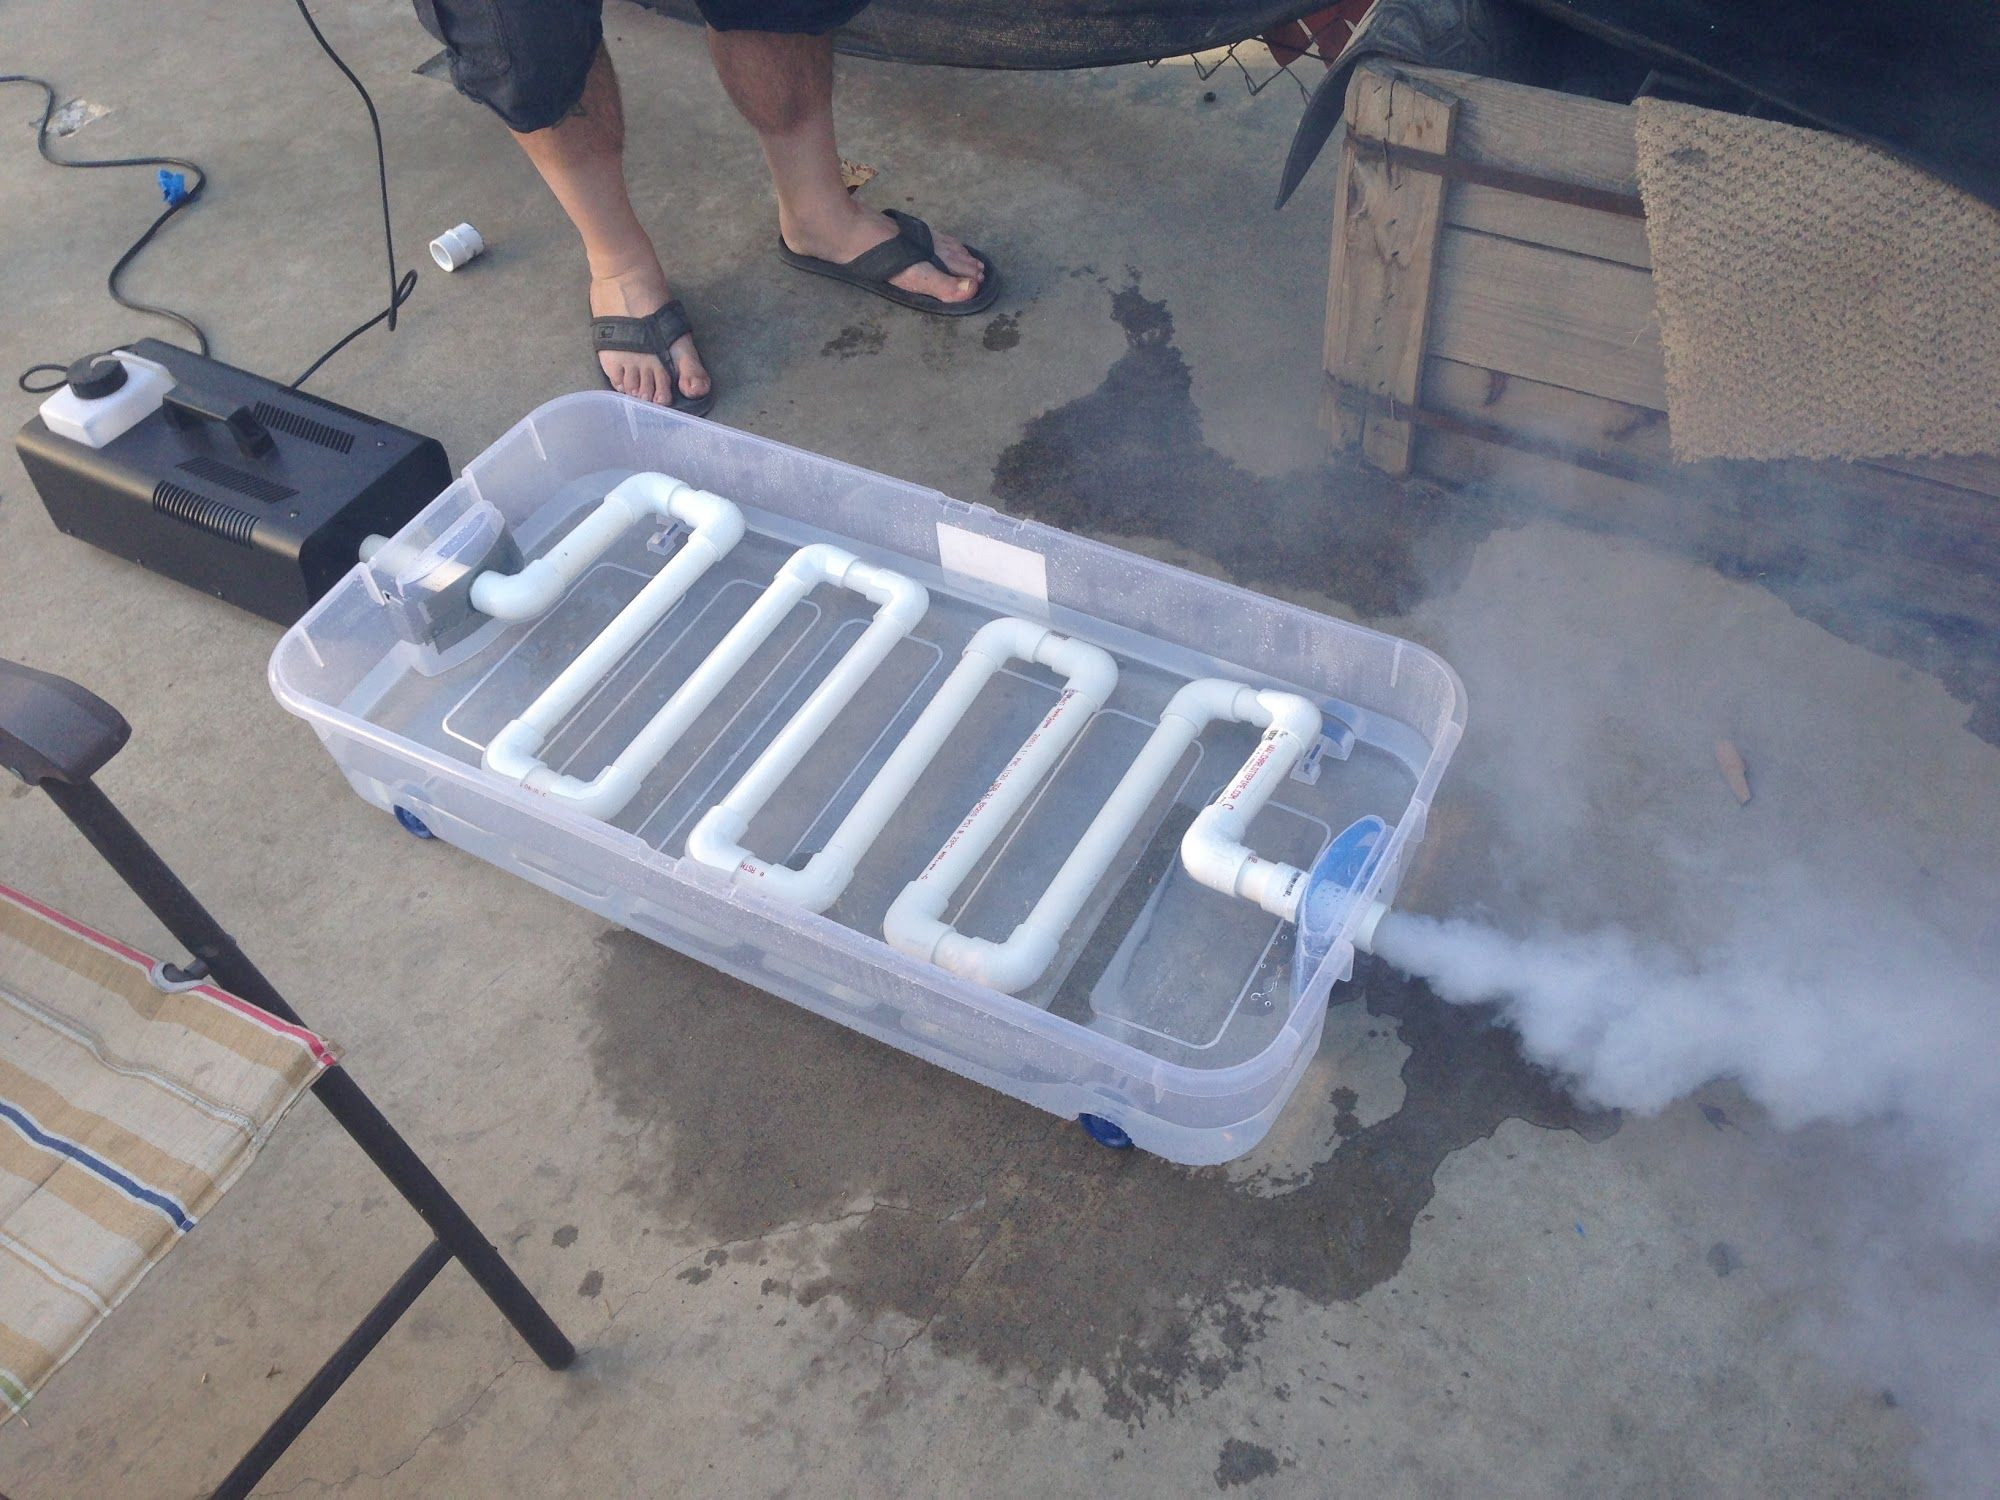 Best ideas about DIY Smoke Machine
. Save or Pin DIY Fog Machine Chiller Crafty Pinterest Now.